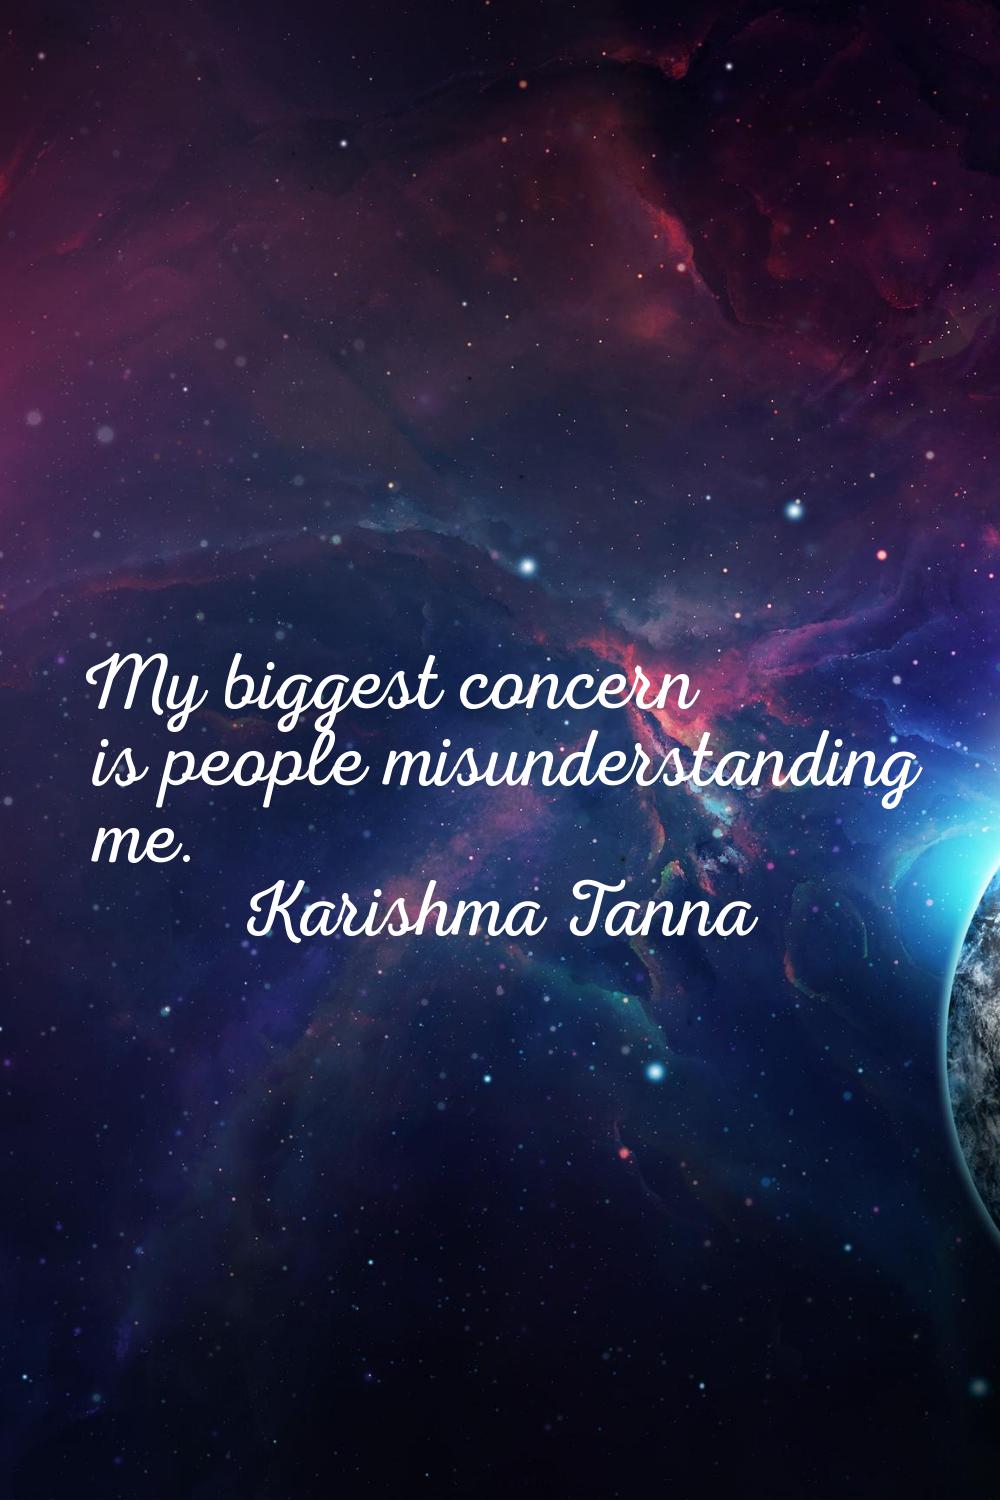 My biggest concern is people misunderstanding me.